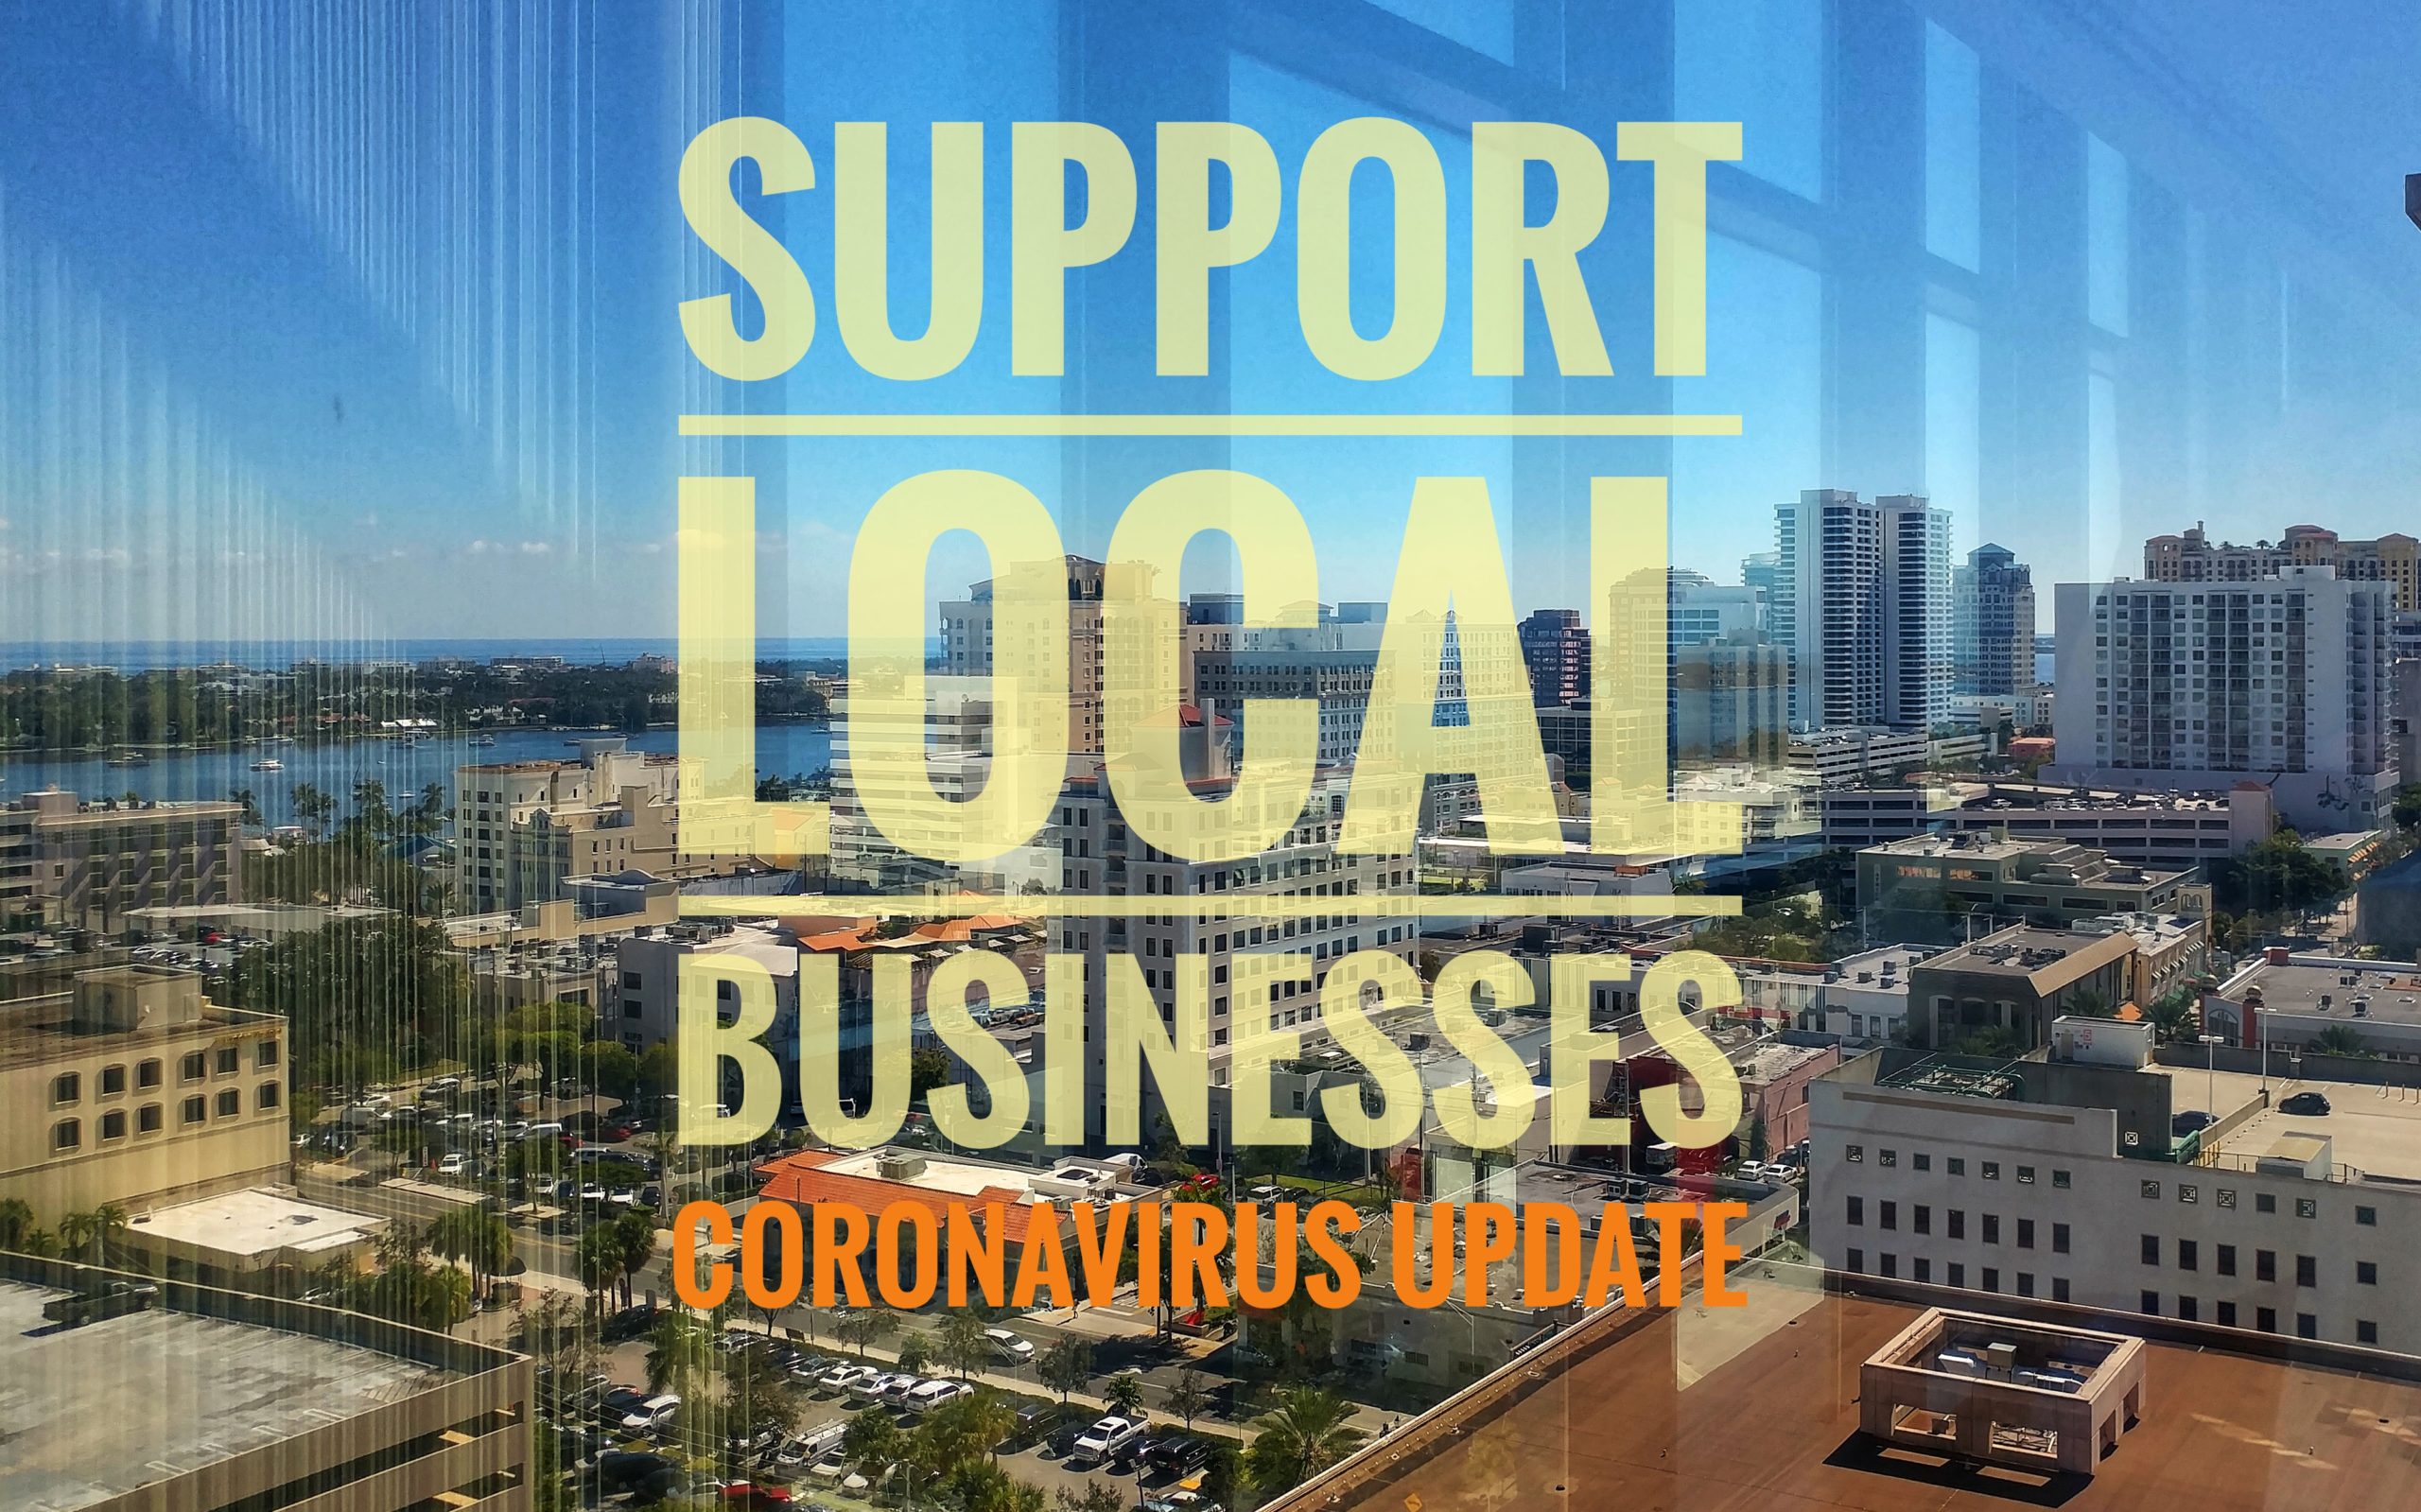 Support local businesses through the Corona Virus Crisis